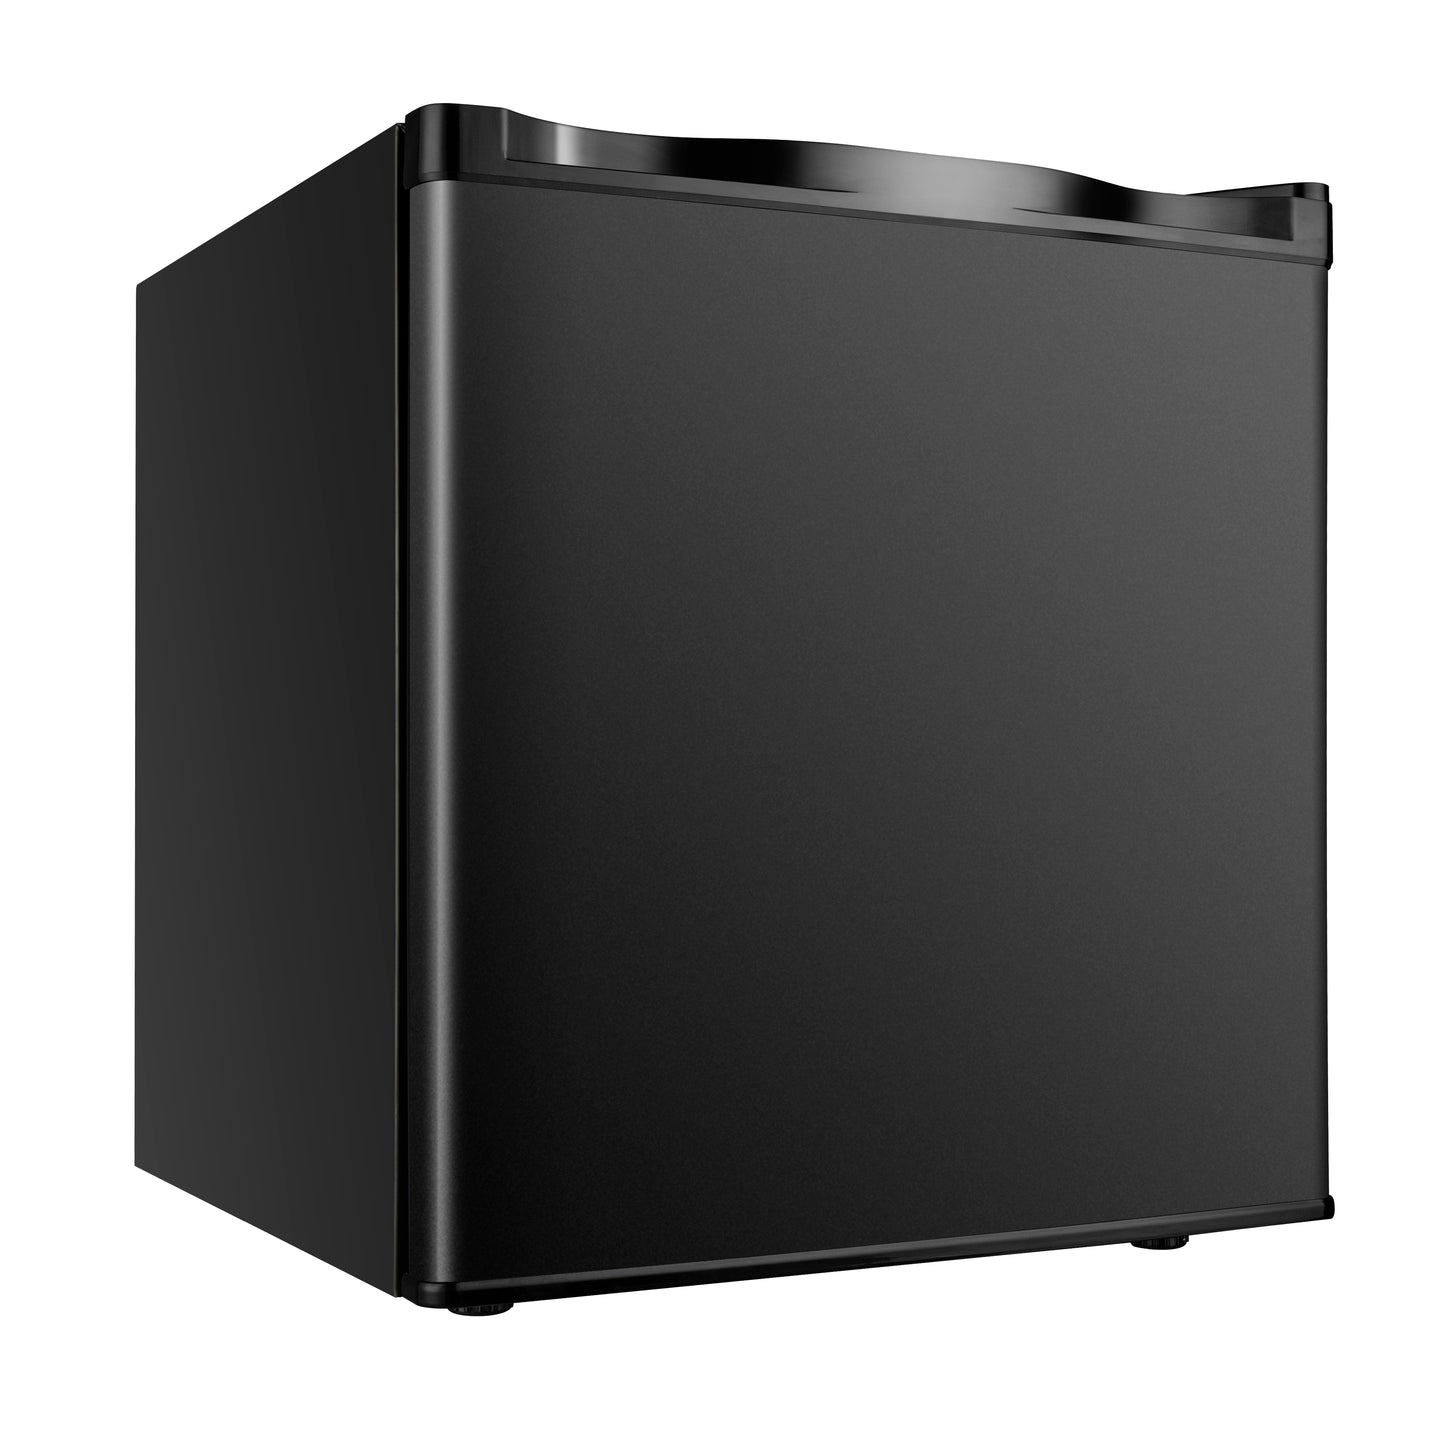 ICYGLEE 2.1 Cubic Feet Upright freezer, Reversible Door, Removable Shelves.